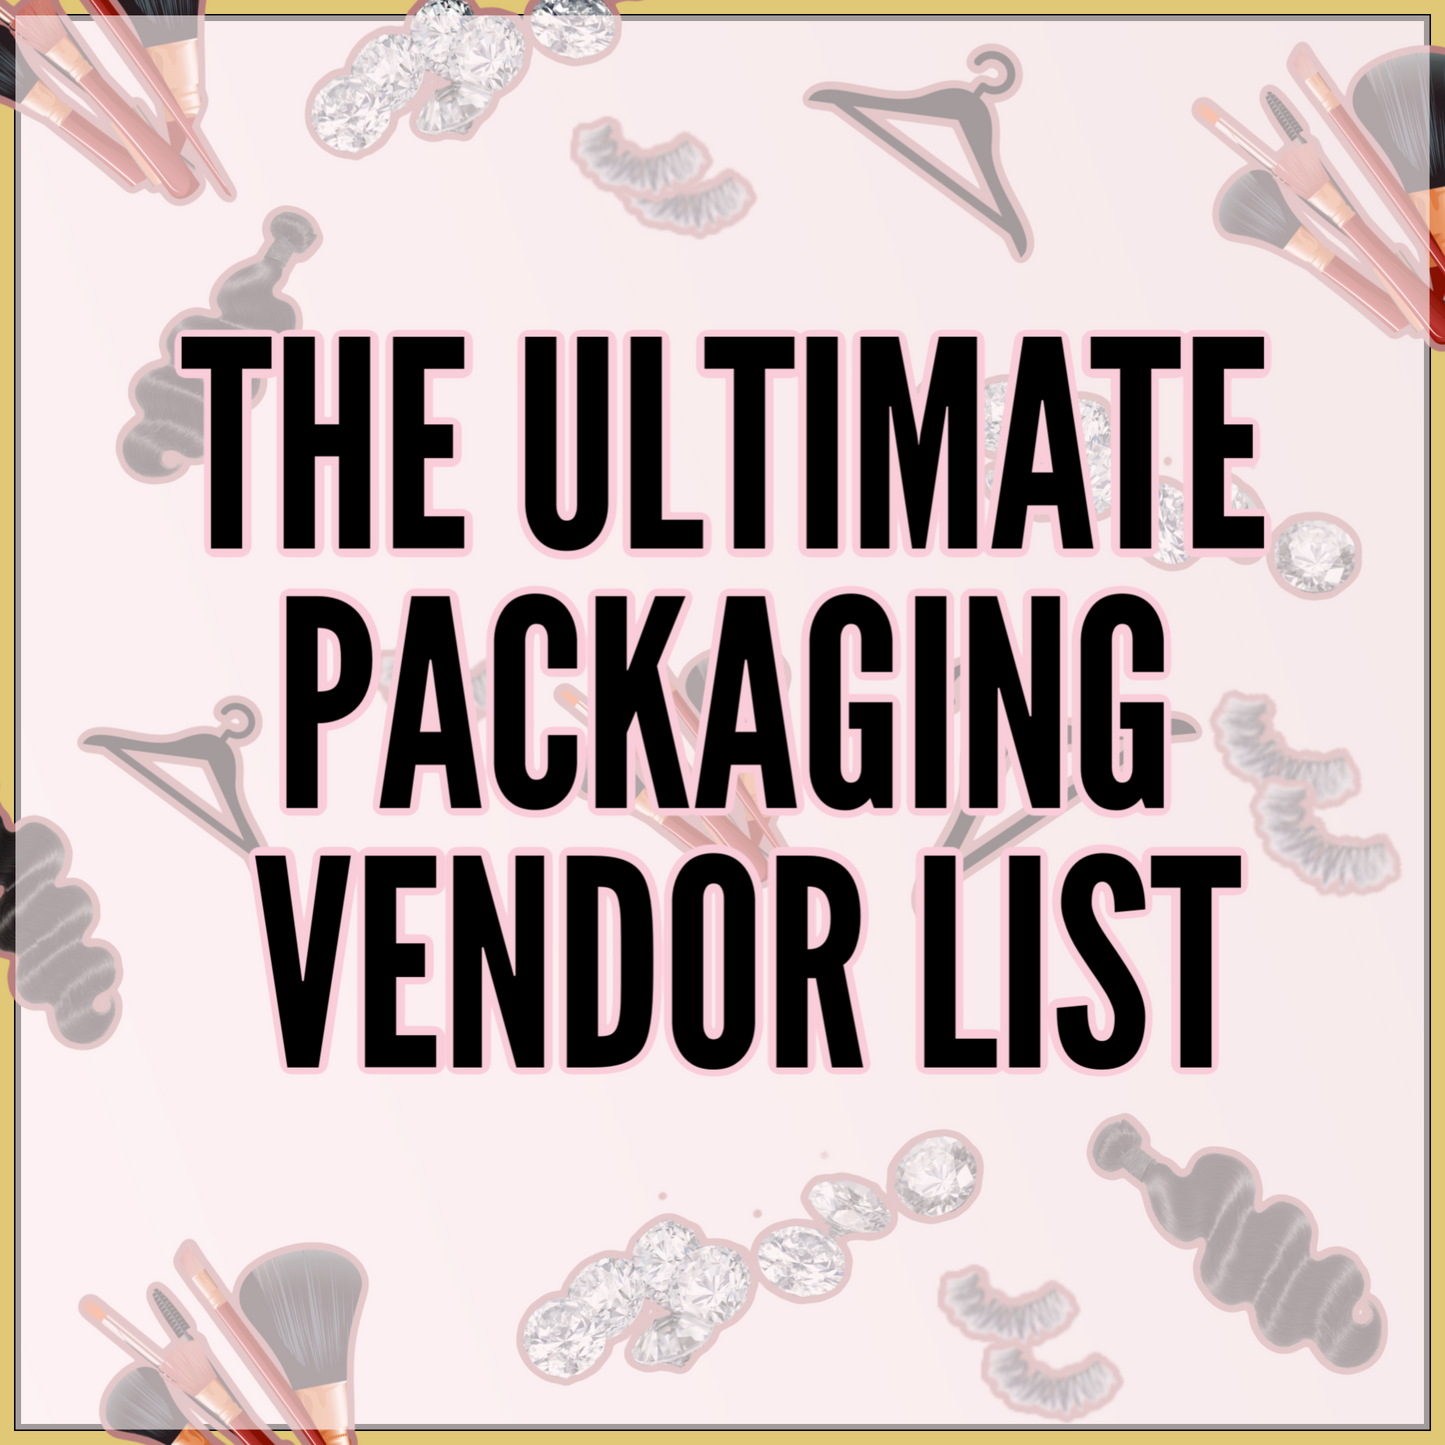 The Ultimate Packaging Vendor List